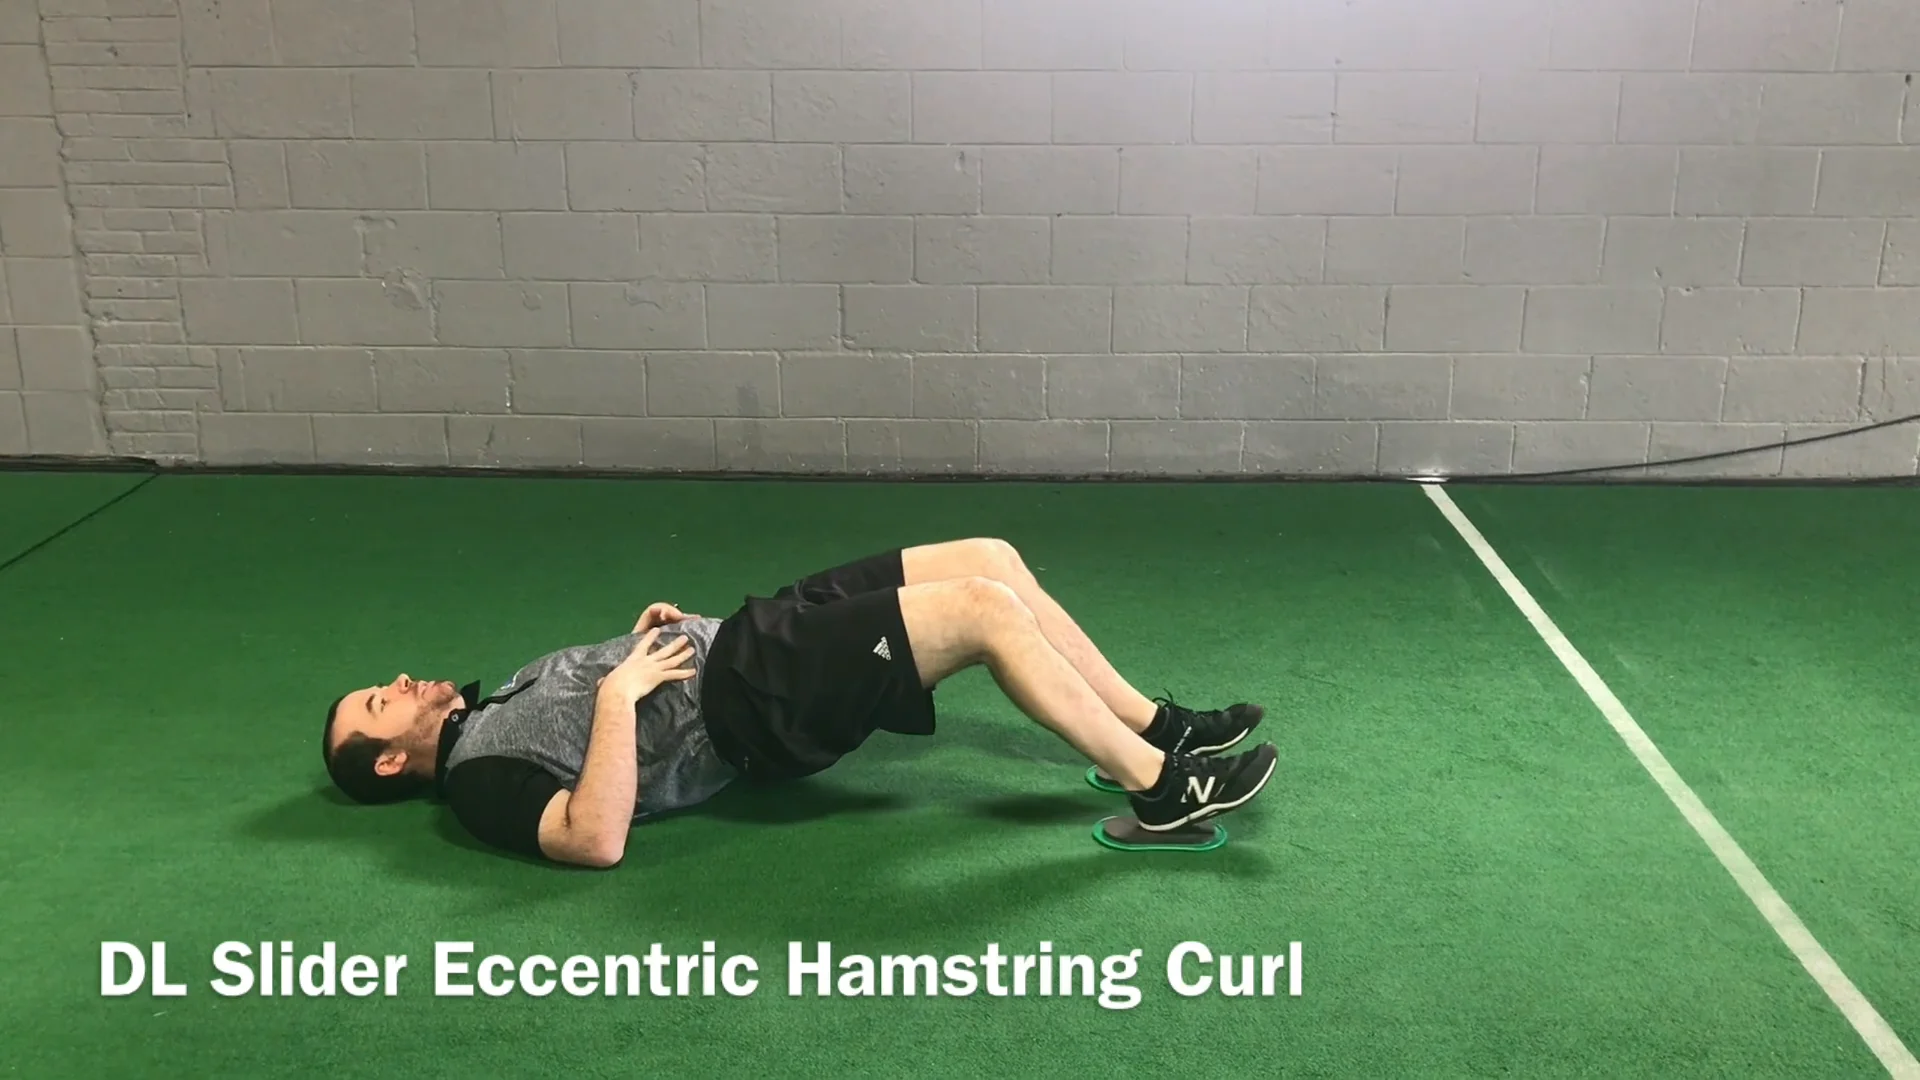 Double Leg Slider Eccentric Hamstring Curl on Vimeo